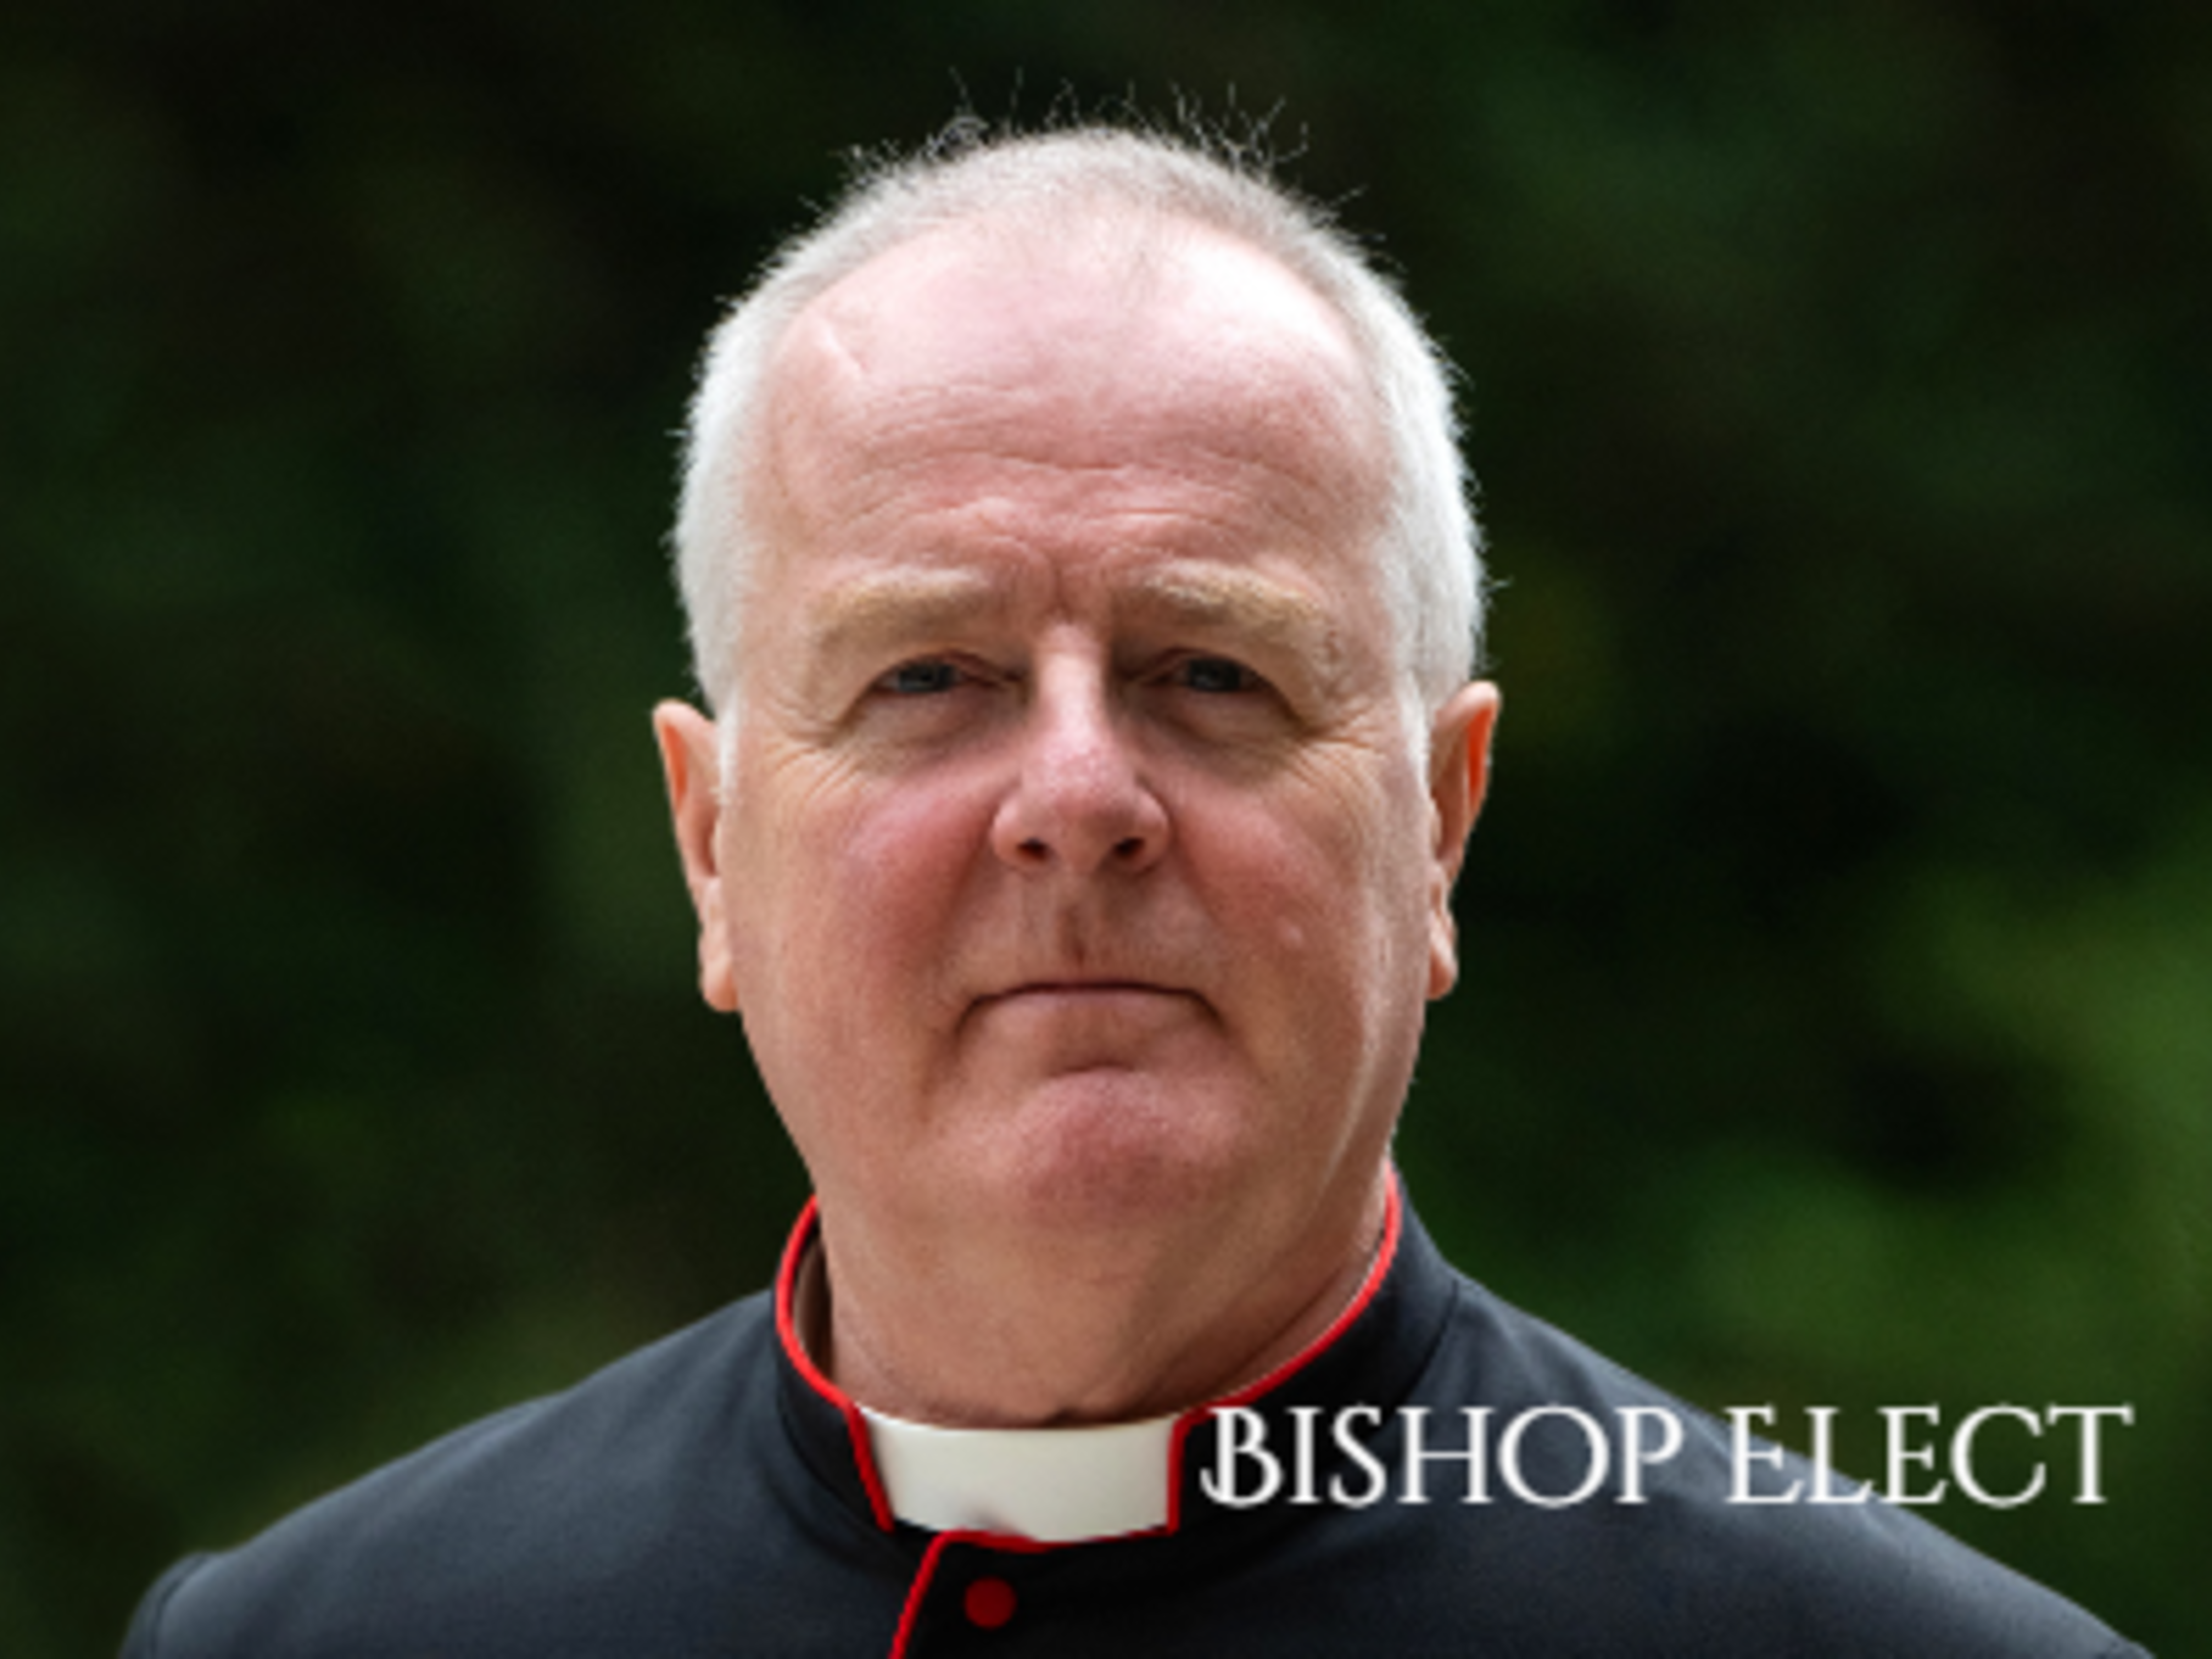 Bishop Elect